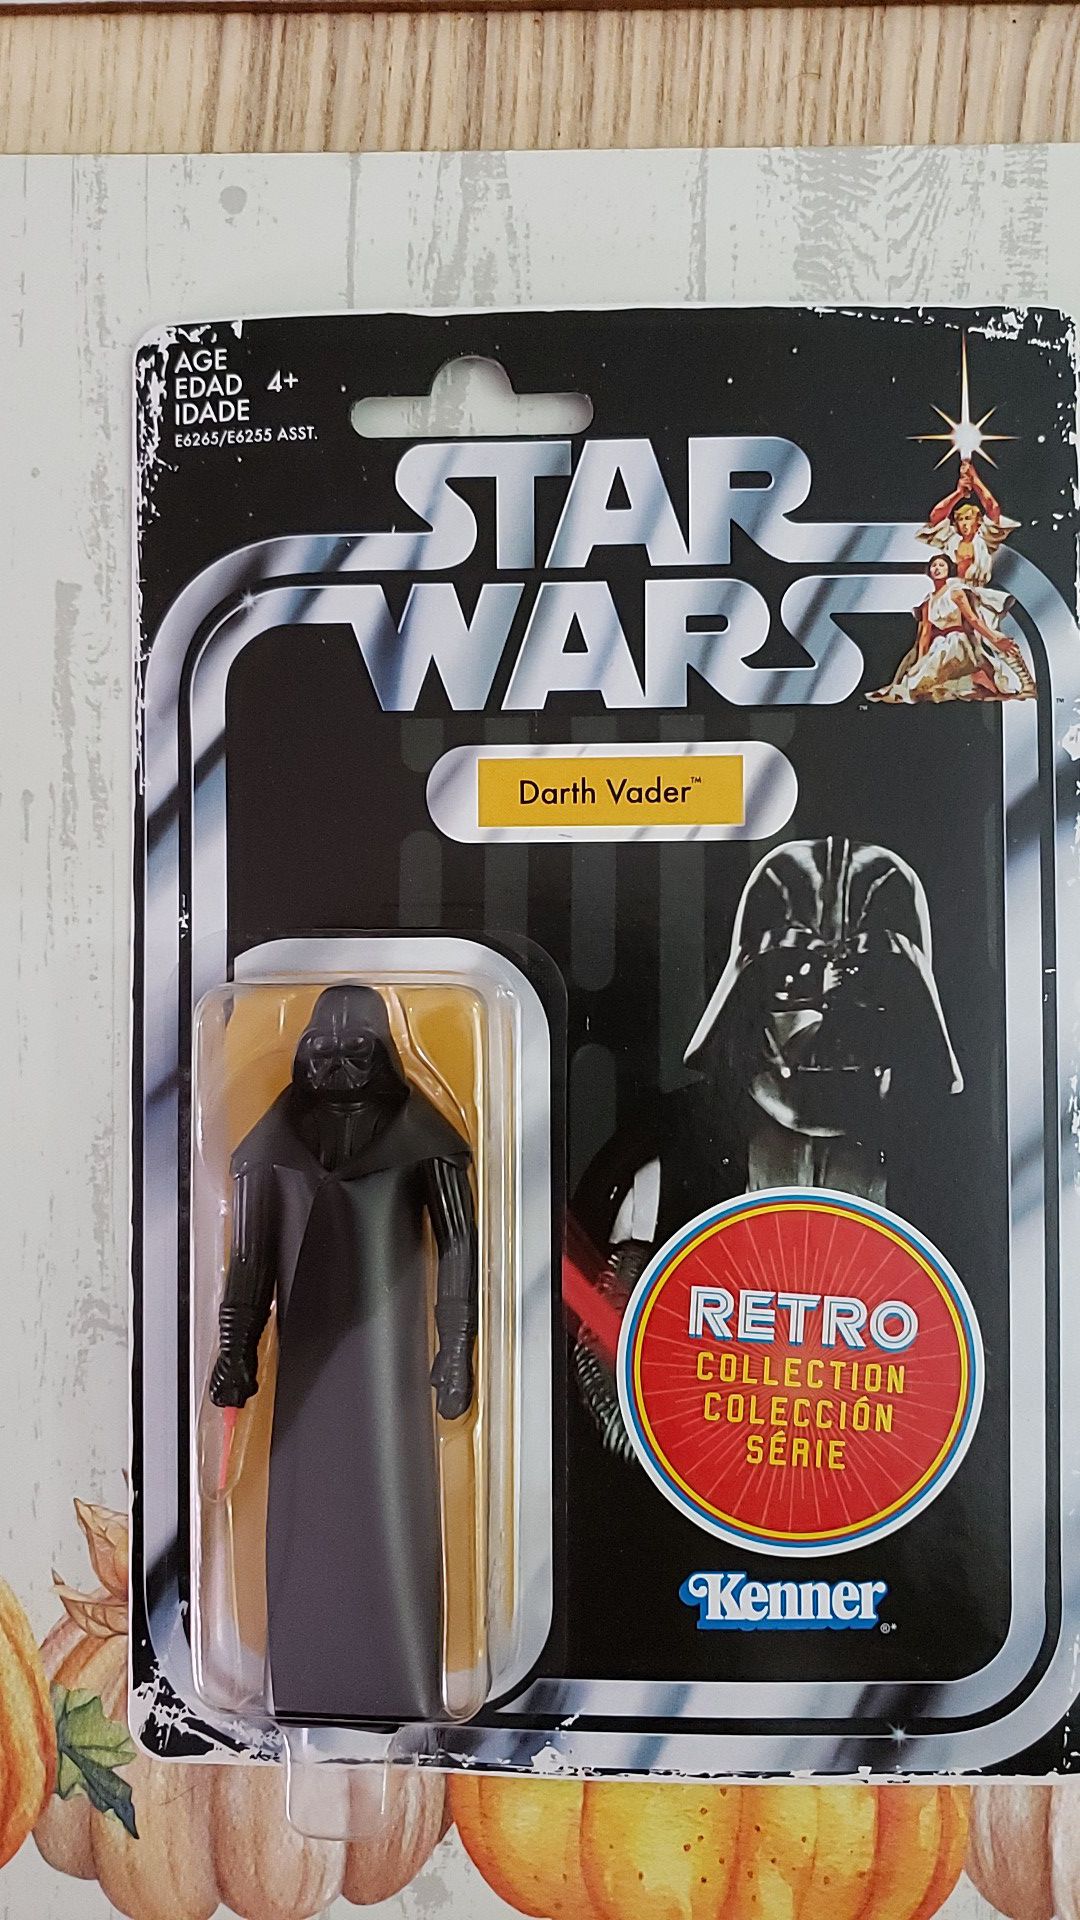 Hasbro Star Wars Retro Collection Darth Vader 3.75 inch figure